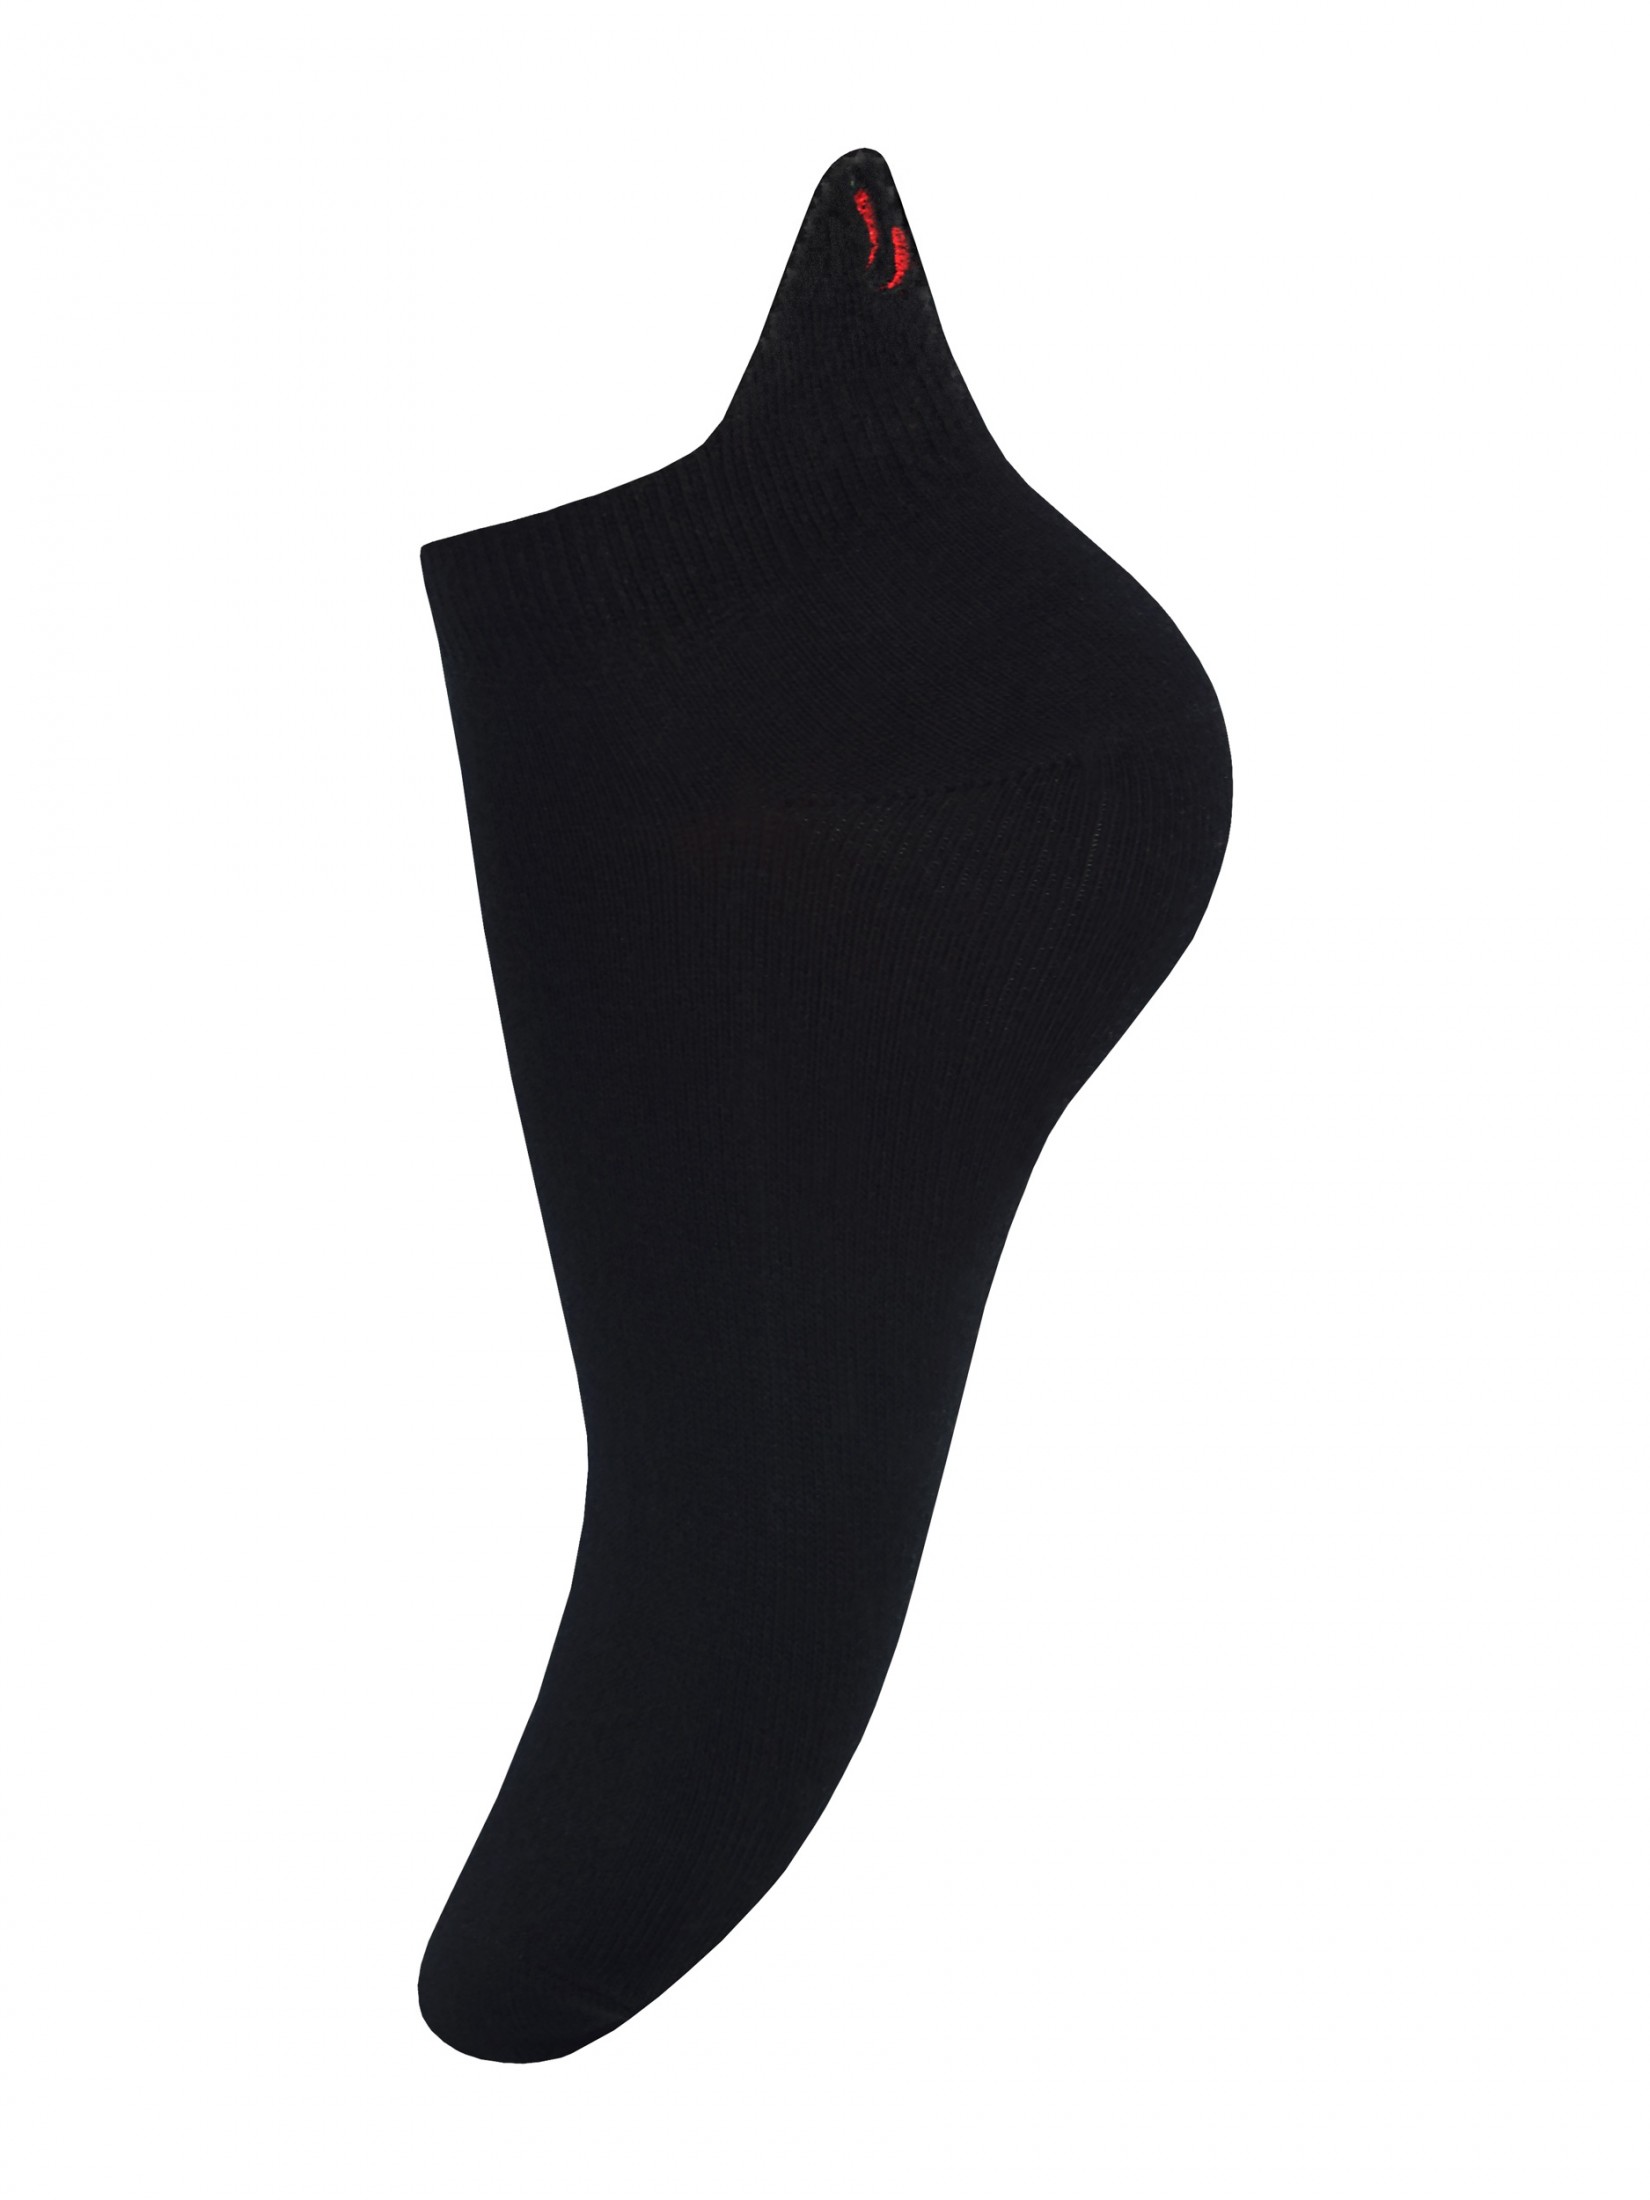 Носки женские Mademoiselle SC-3102 черные UNICA